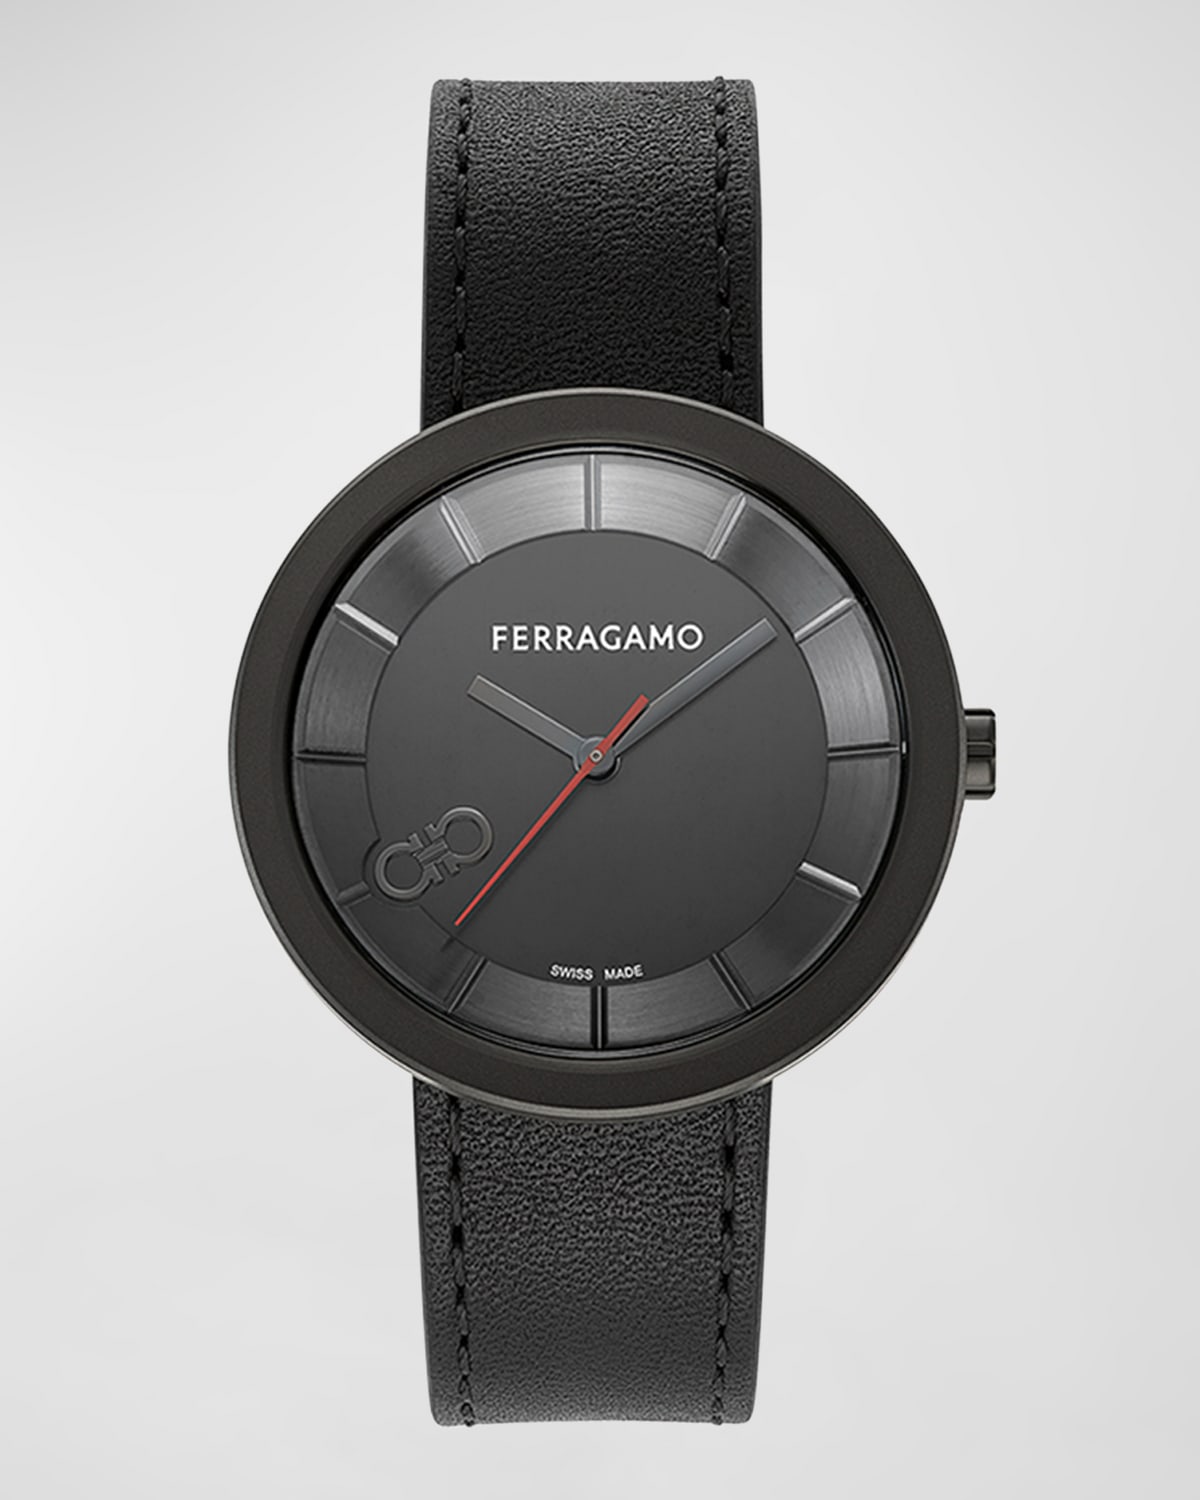 35mm Ferragamo Curve V2 Watch with Calf Leather Strap, Black